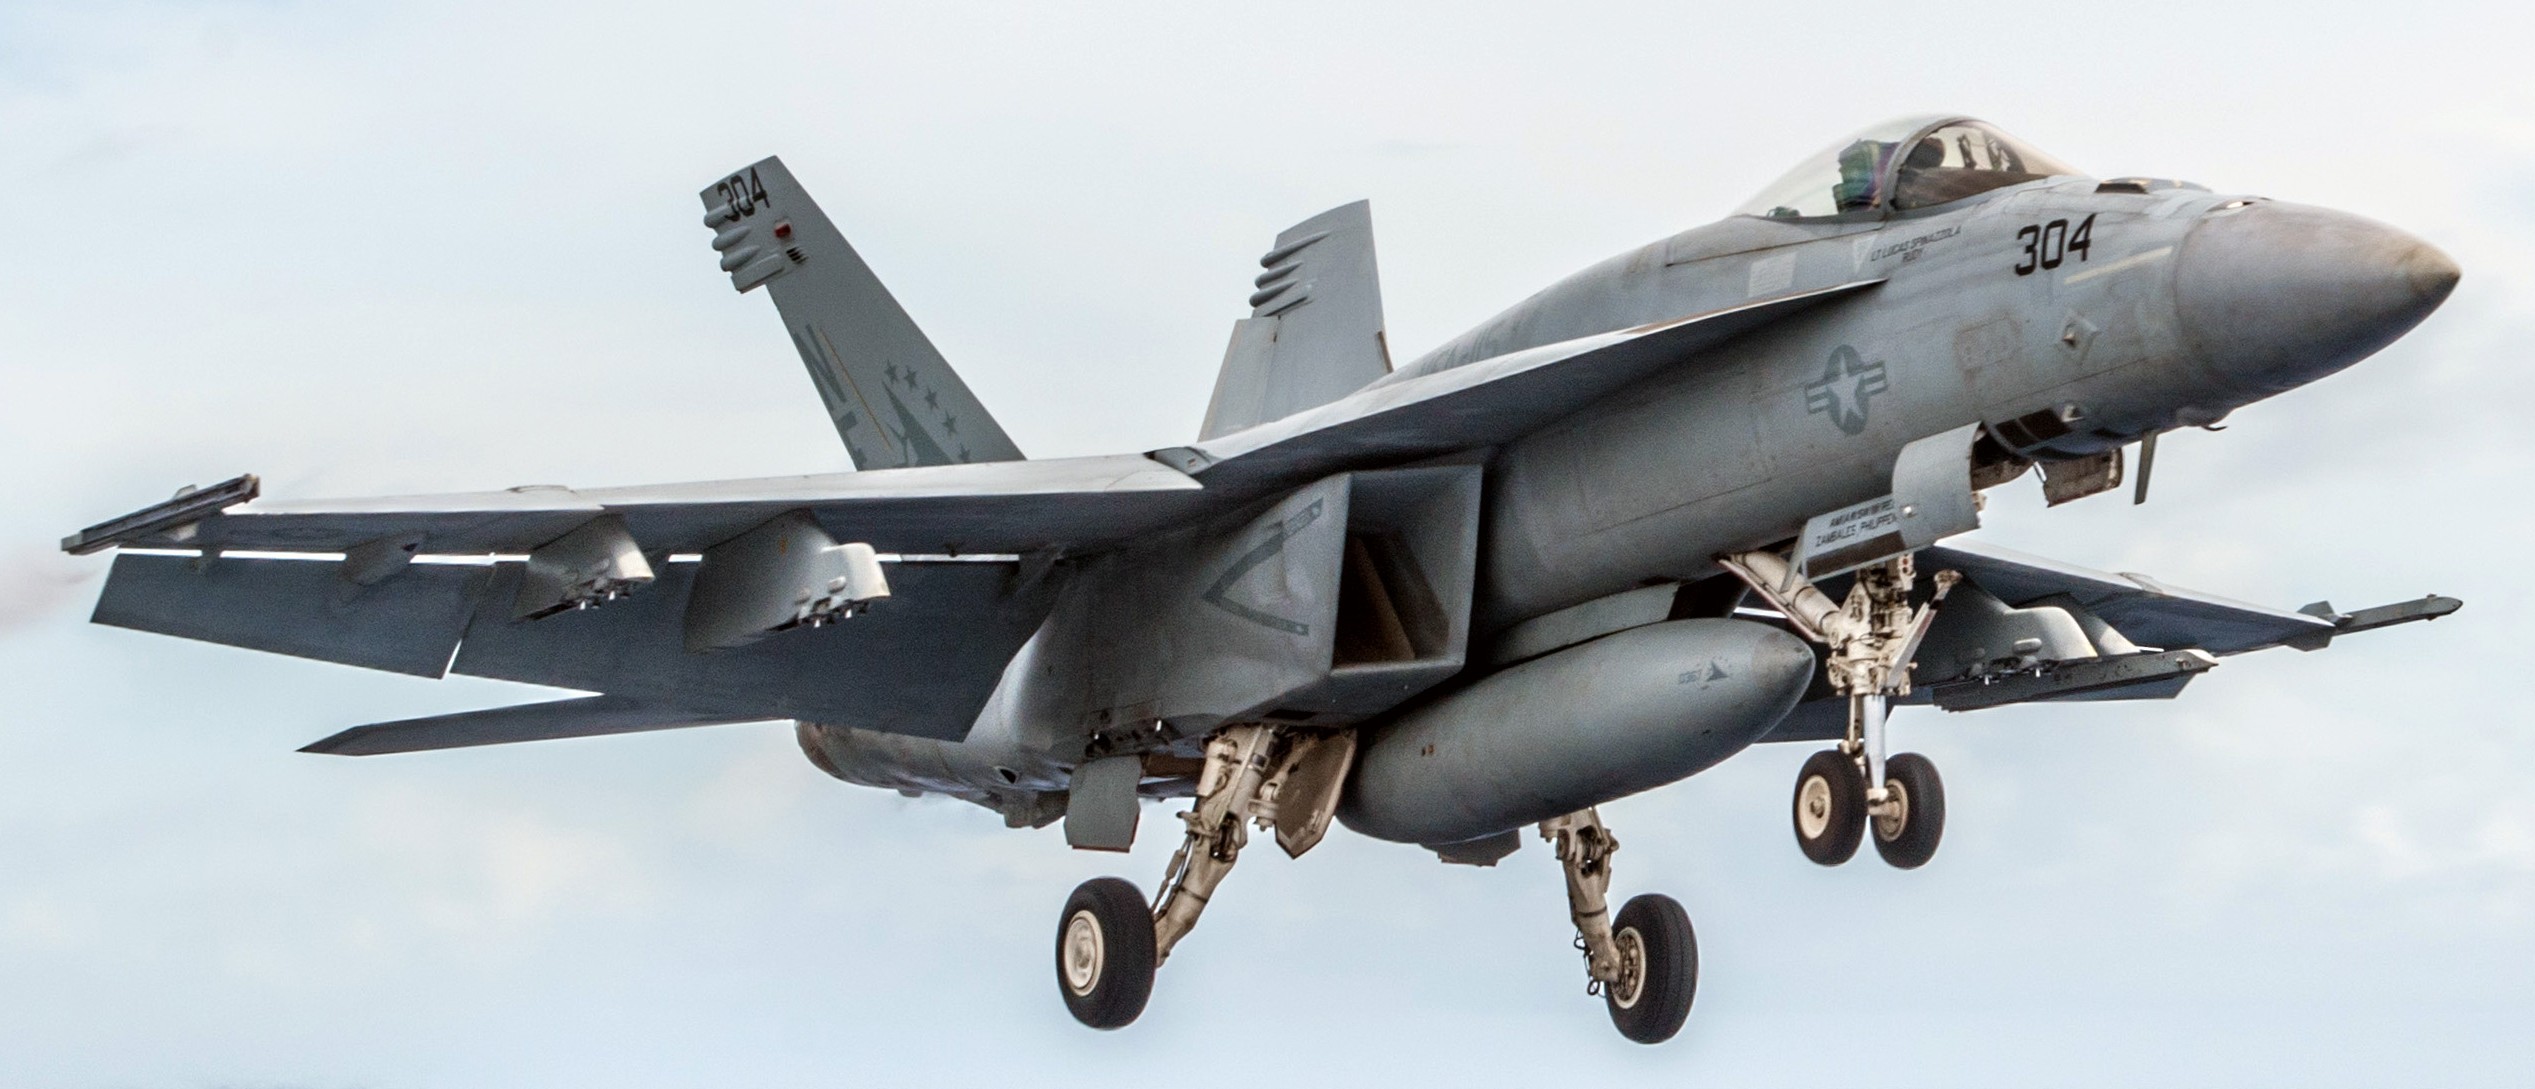 vfa-115 eagles strike fighter squadron f/a-18e super hornet cvw-5 uss ronald reagan cvn-76 2016 10